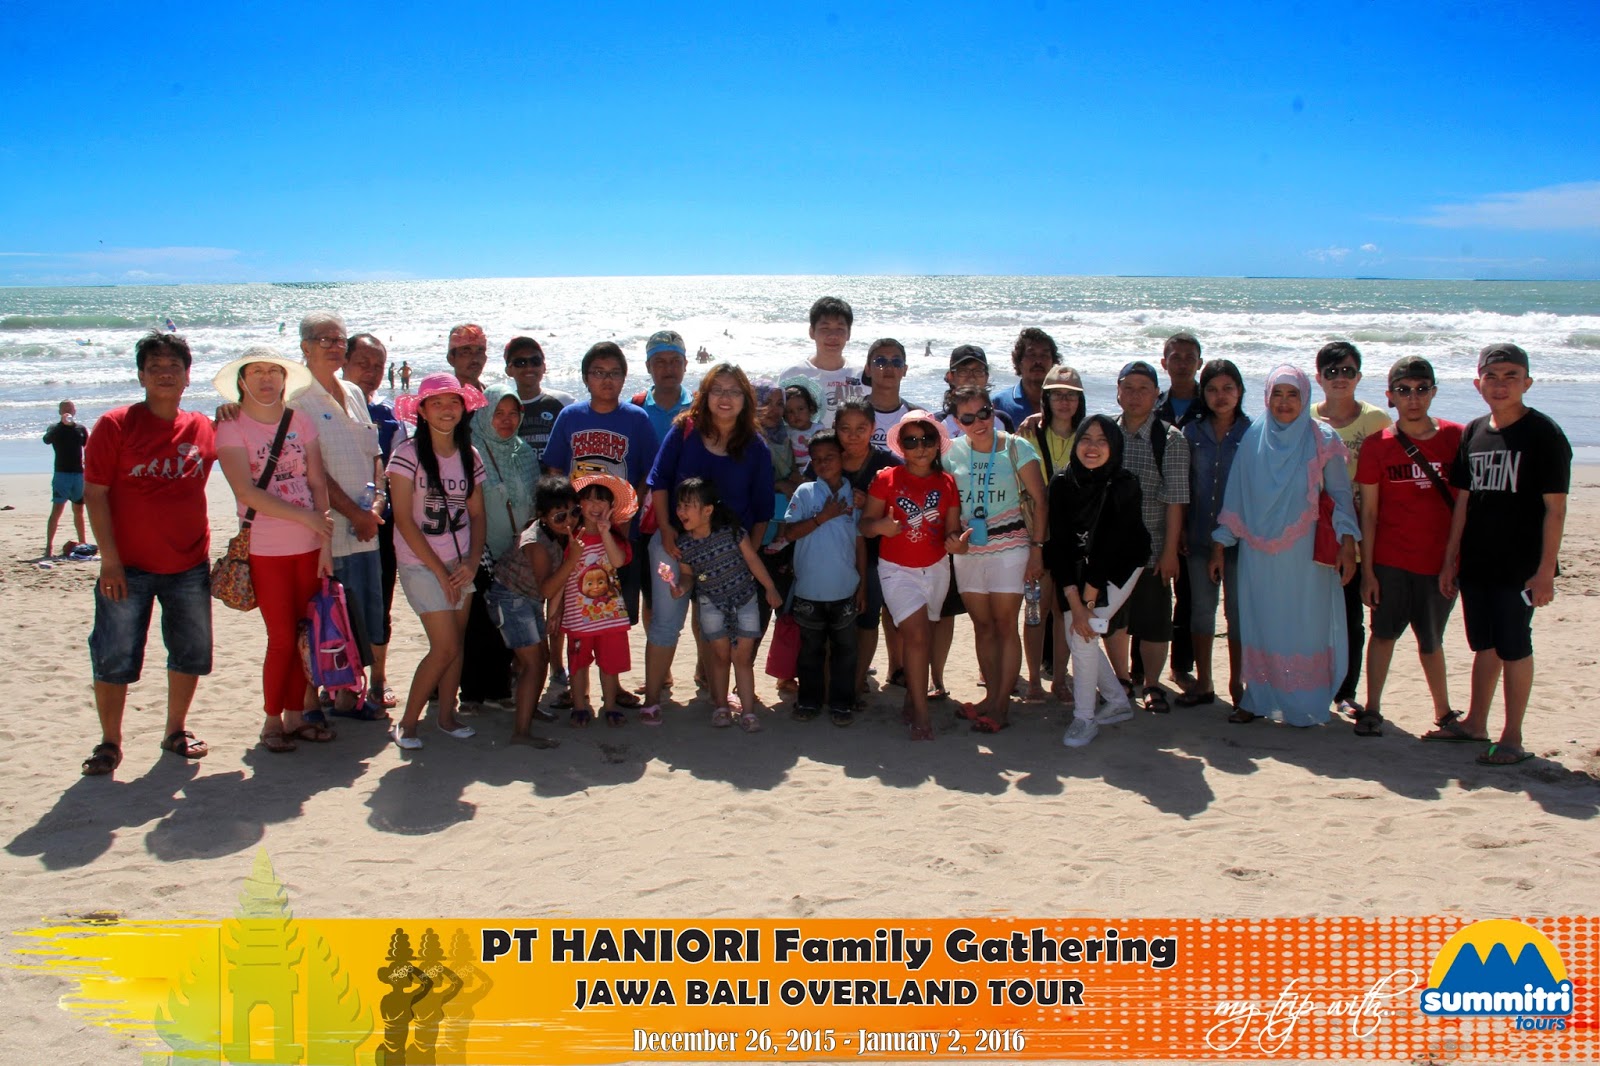 Pt haniori family gathering goes to bali.